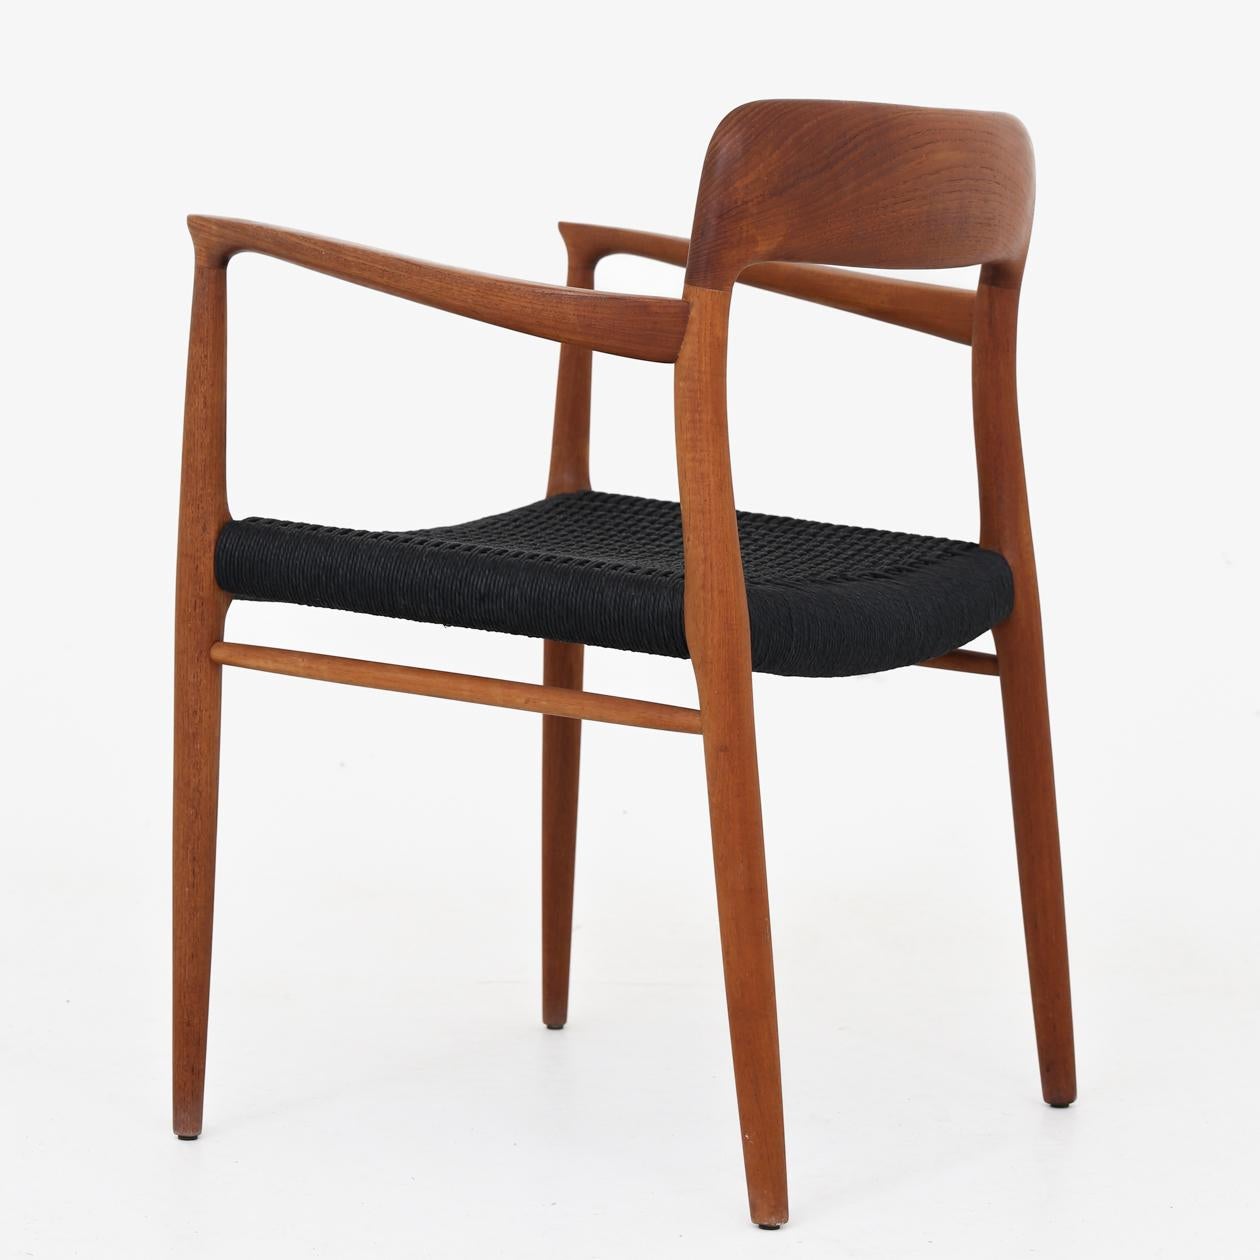 NO 56 - armchair in teak and black paper cord. Niels O. Møller / J. L Møller.